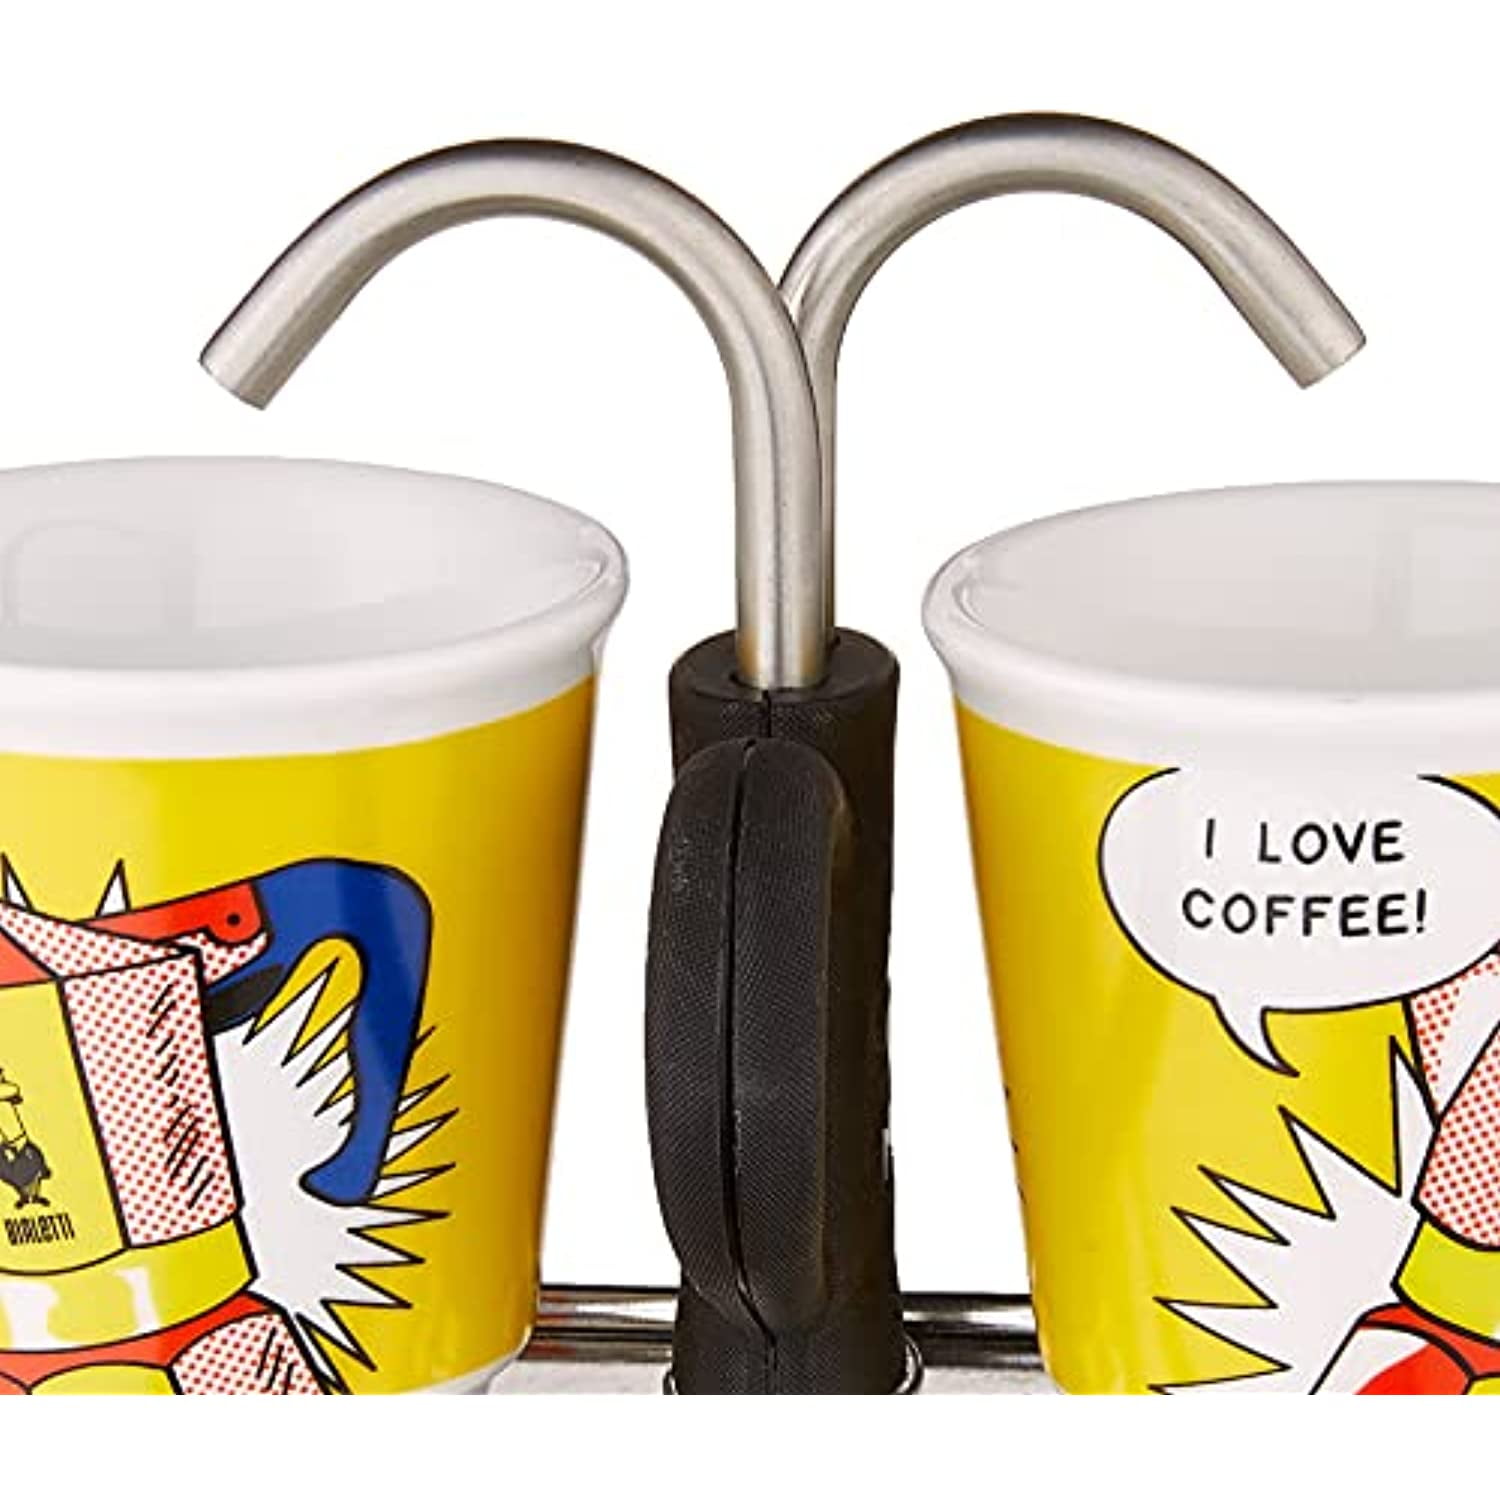  Bialetti - Mini Express Magritte: Moka Set includes Coffee  Maker 2-Cup (2.8 Oz) + 2 shot glasses, Red, Aluminium: Home & Kitchen